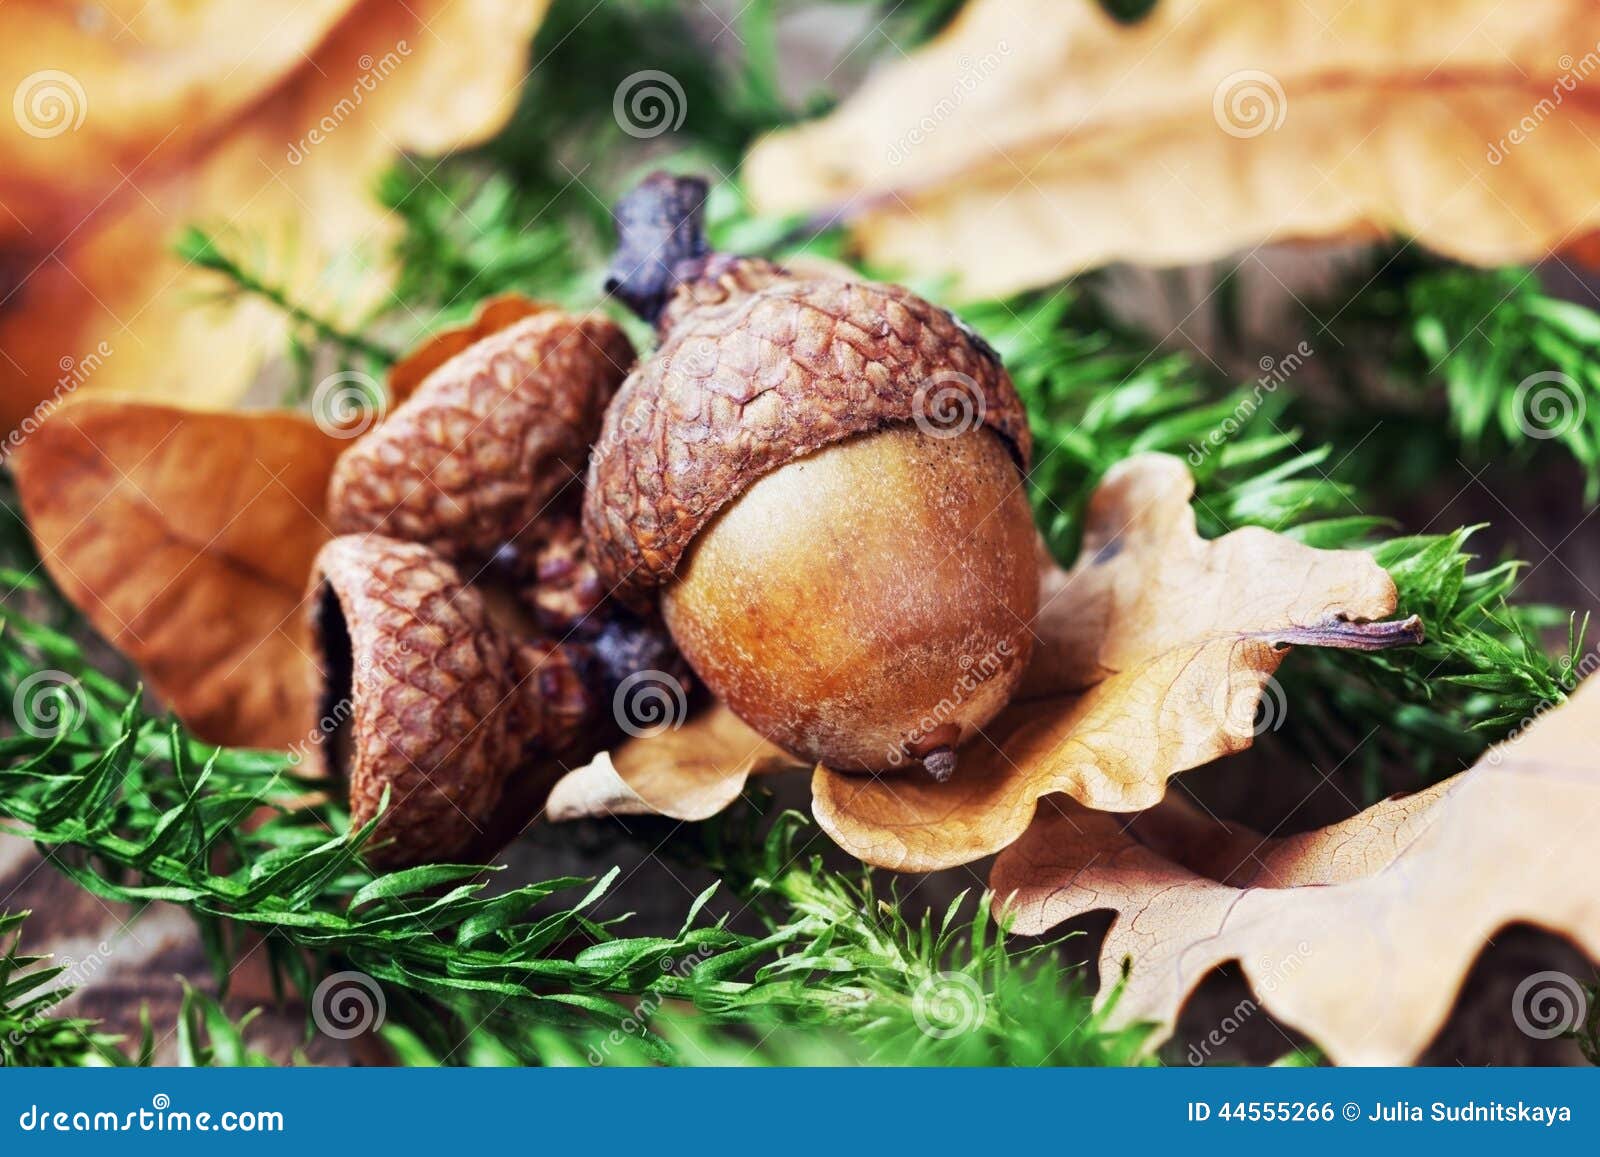 autumn background with acorns